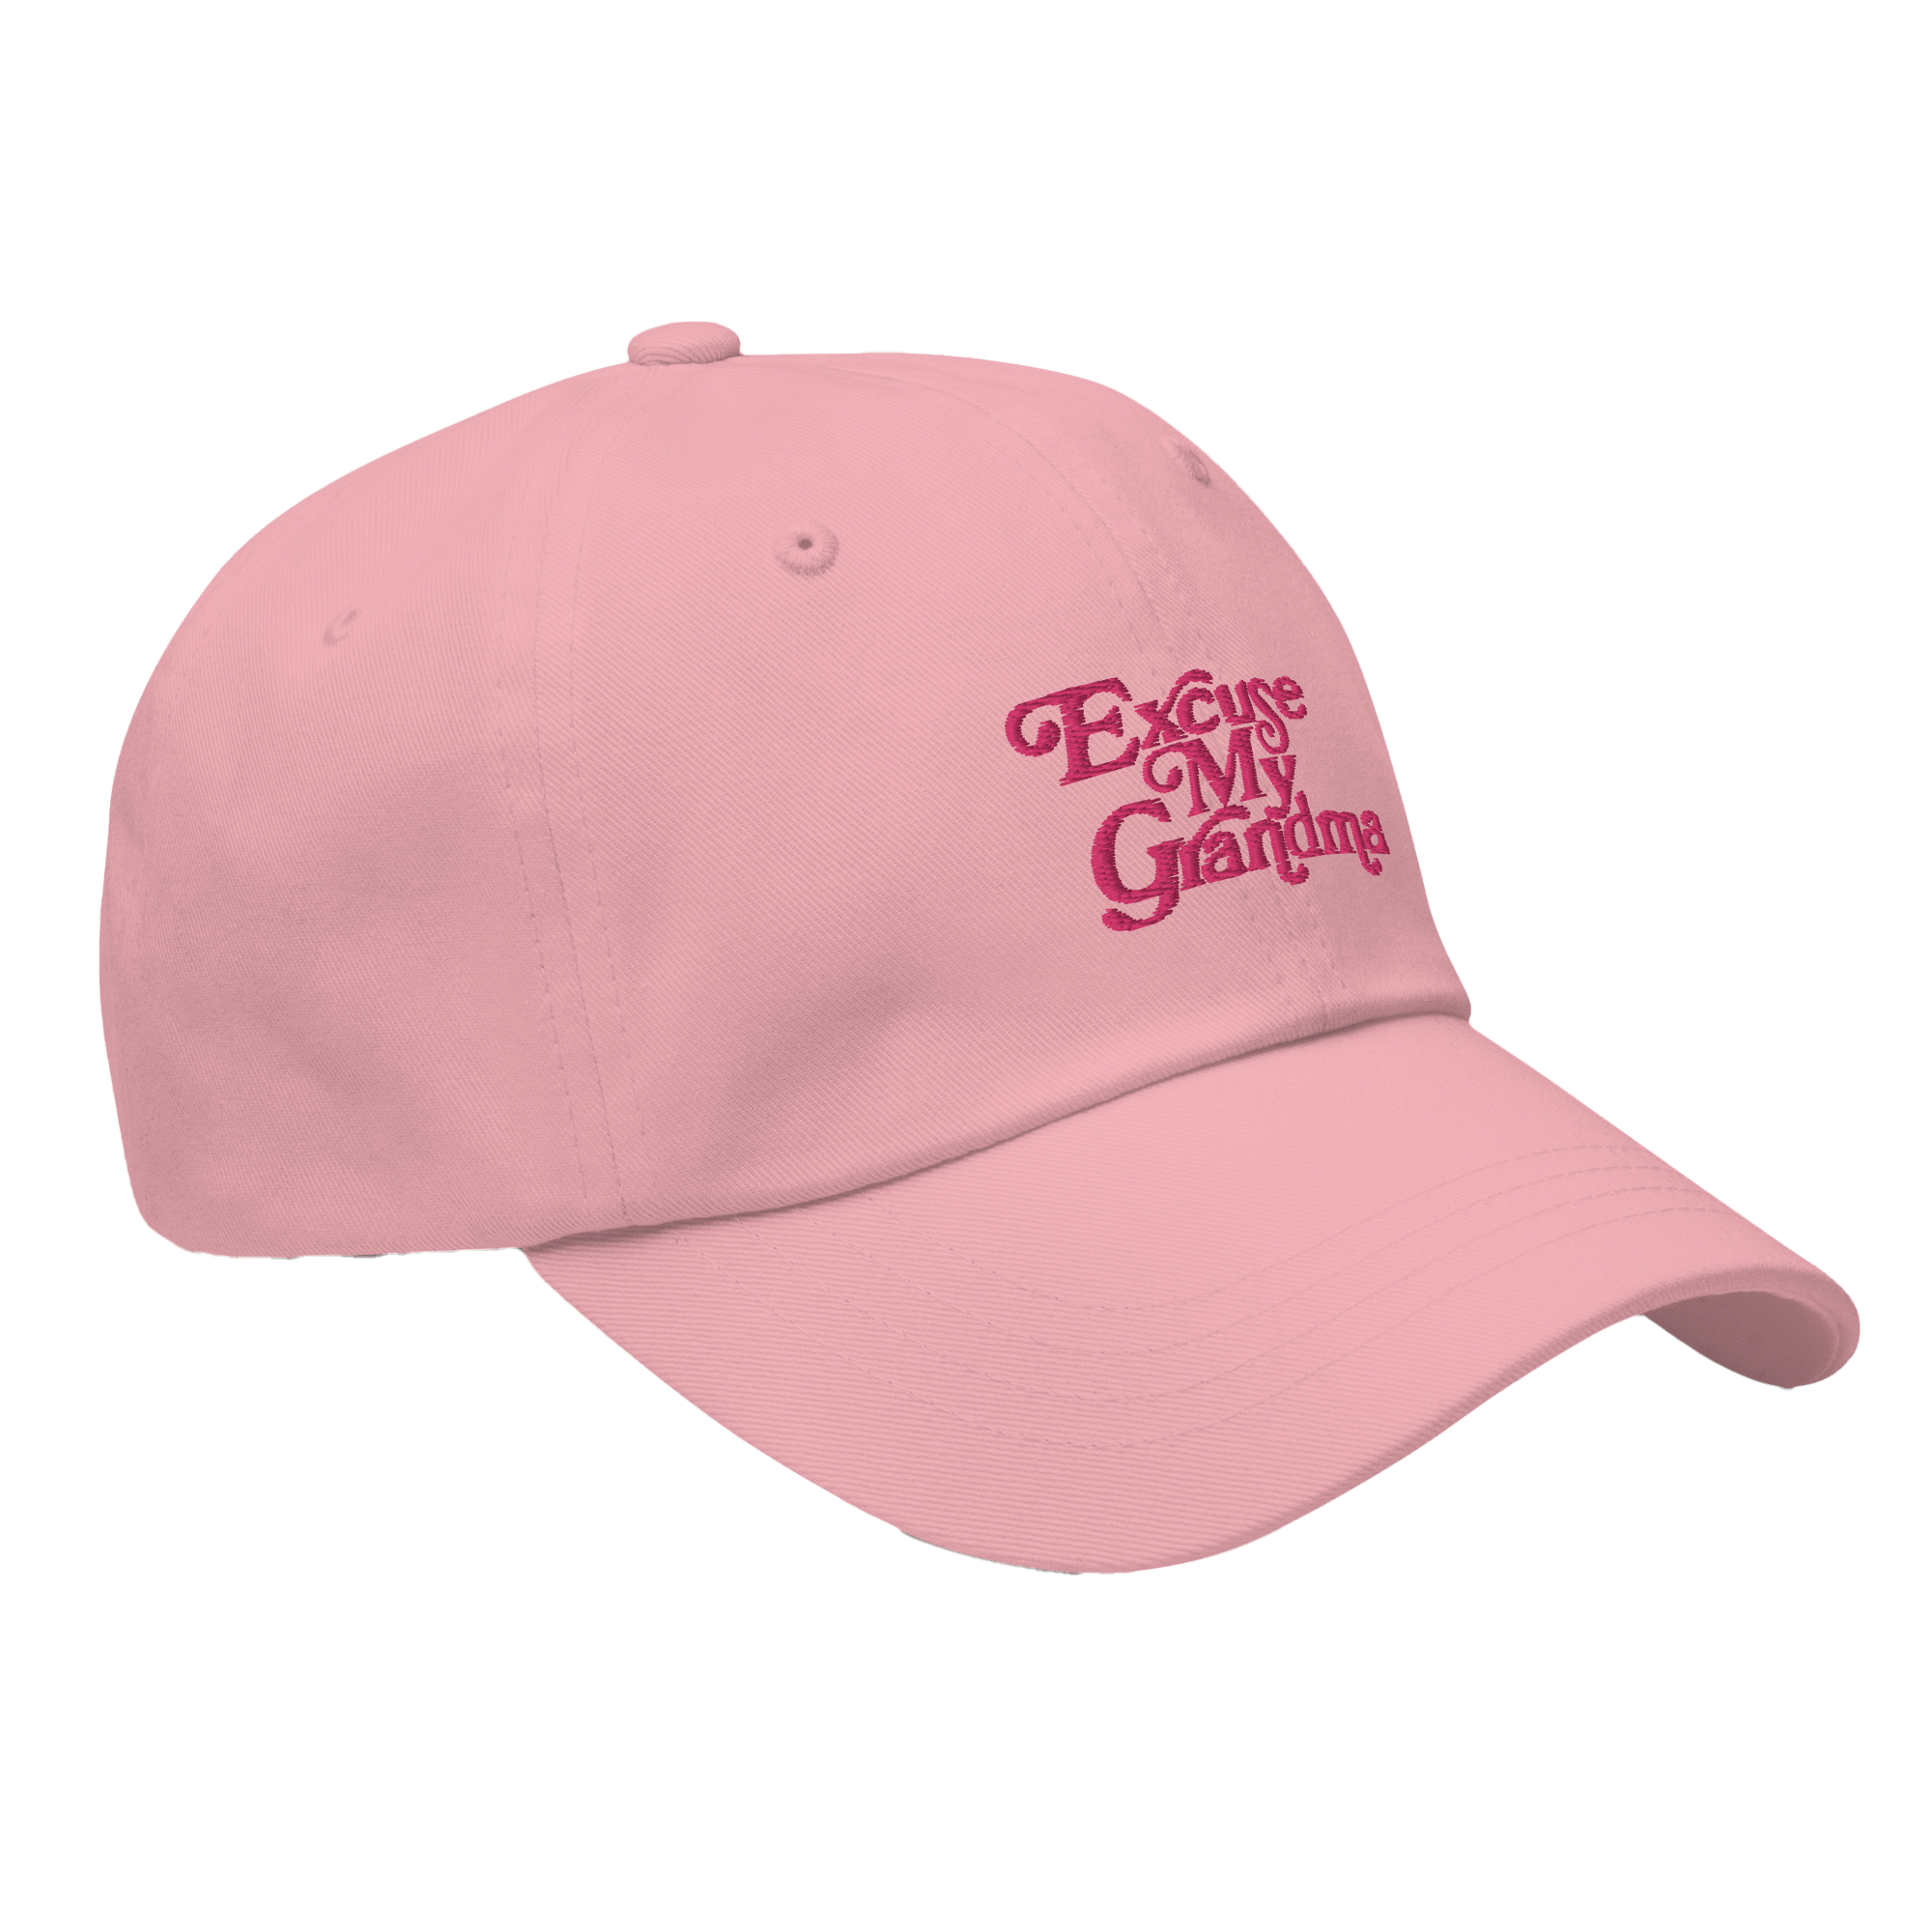 Signature Pink Dad Hat - Excuse My Grandma